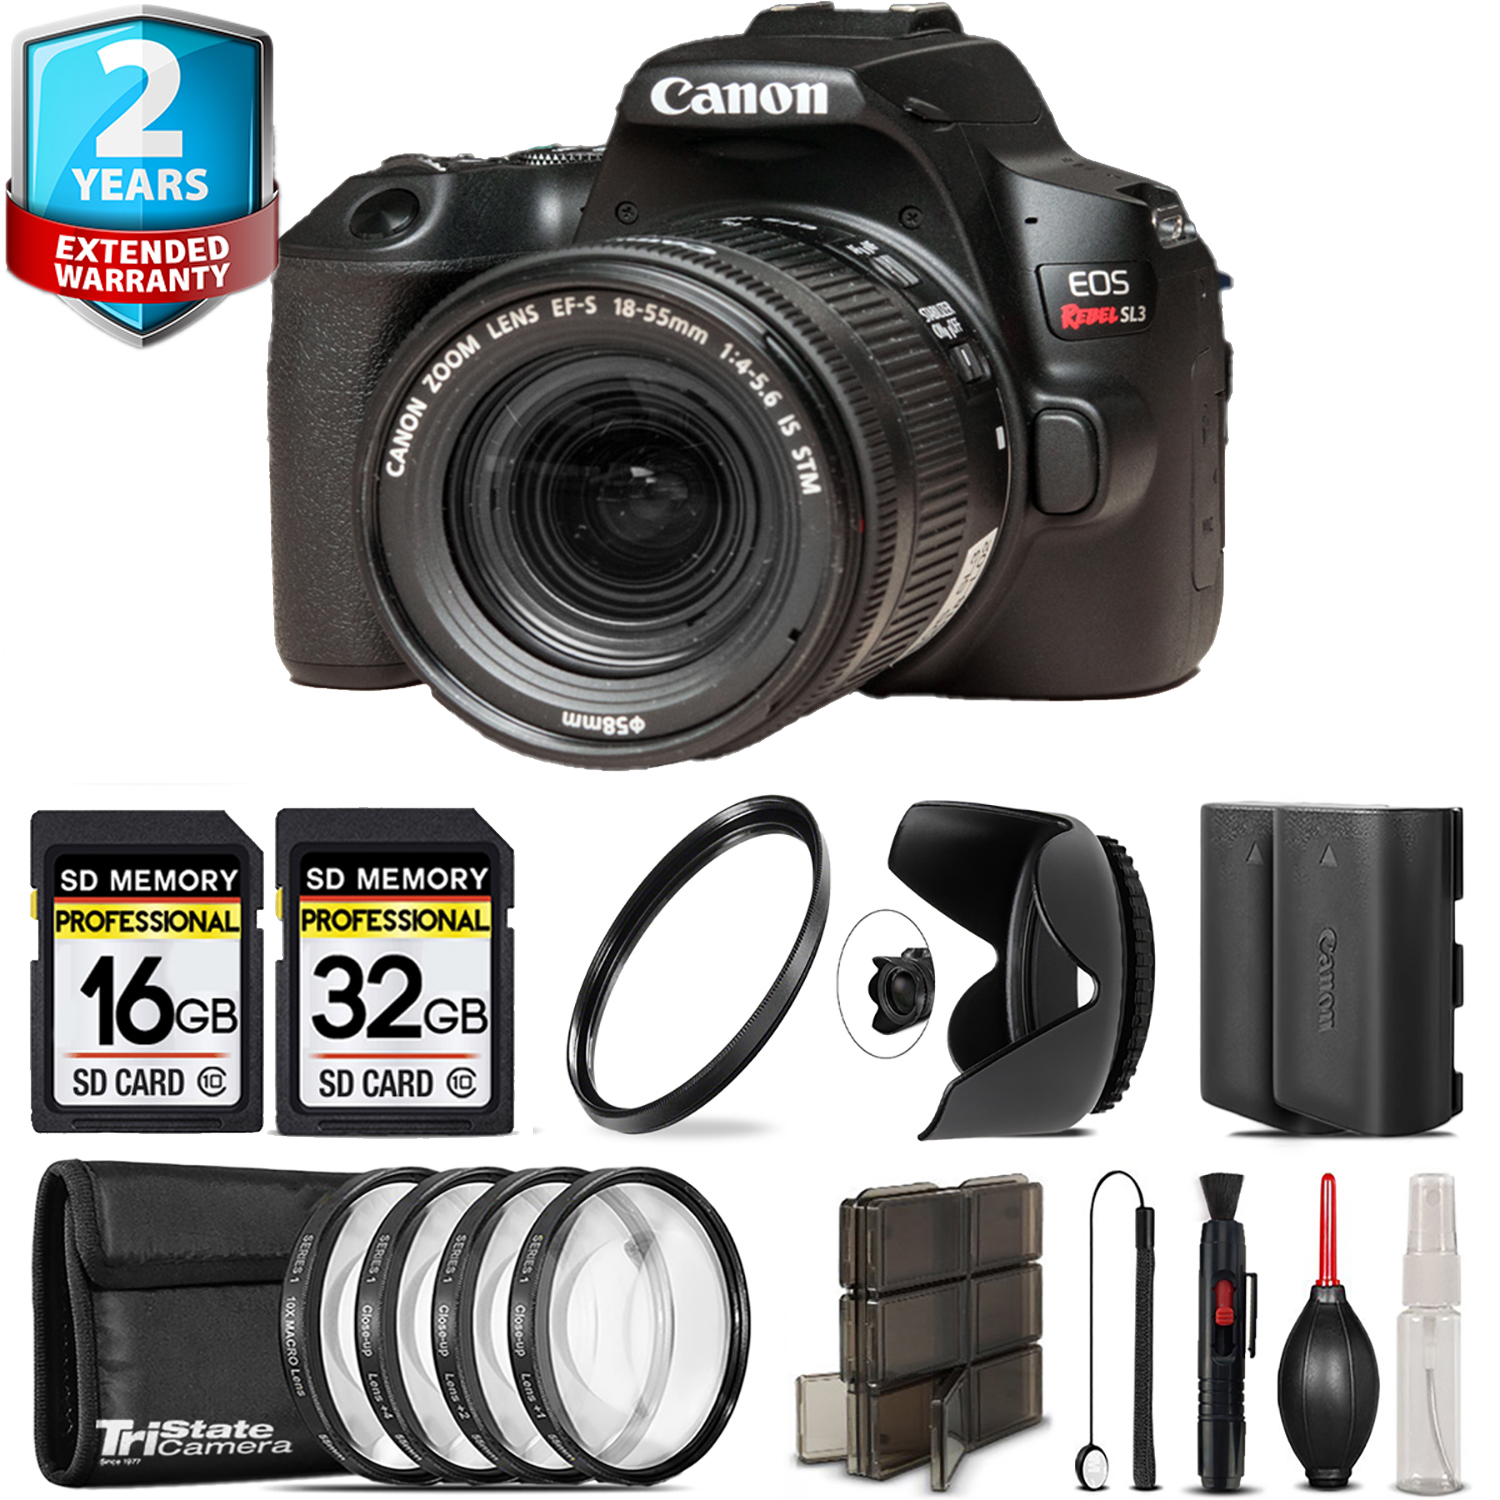 EOS Rebel SL3 Camera (Black) + 18-55mm IS STM + 4 Piece Macro Set + 48GB *FREE SHIPPING*